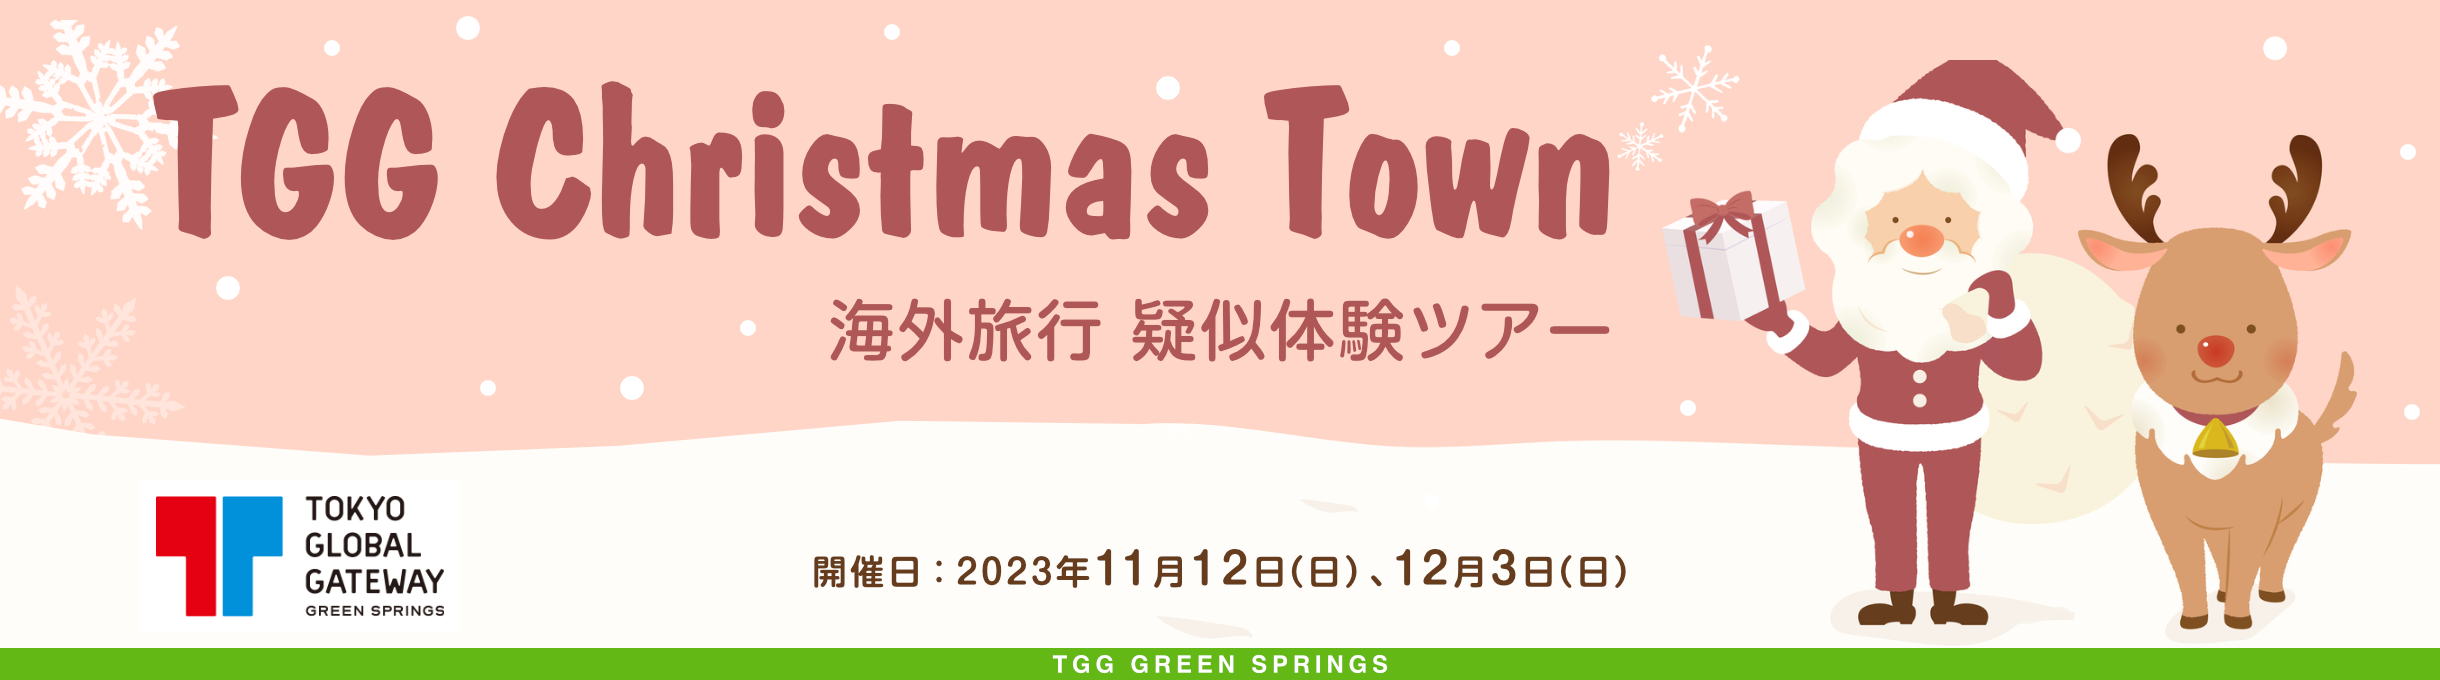 TGG Christmas Town  海外旅行 疑似体験ツアー 11月12日(日)、12月3日(日) TGG GREEN SPRINGS